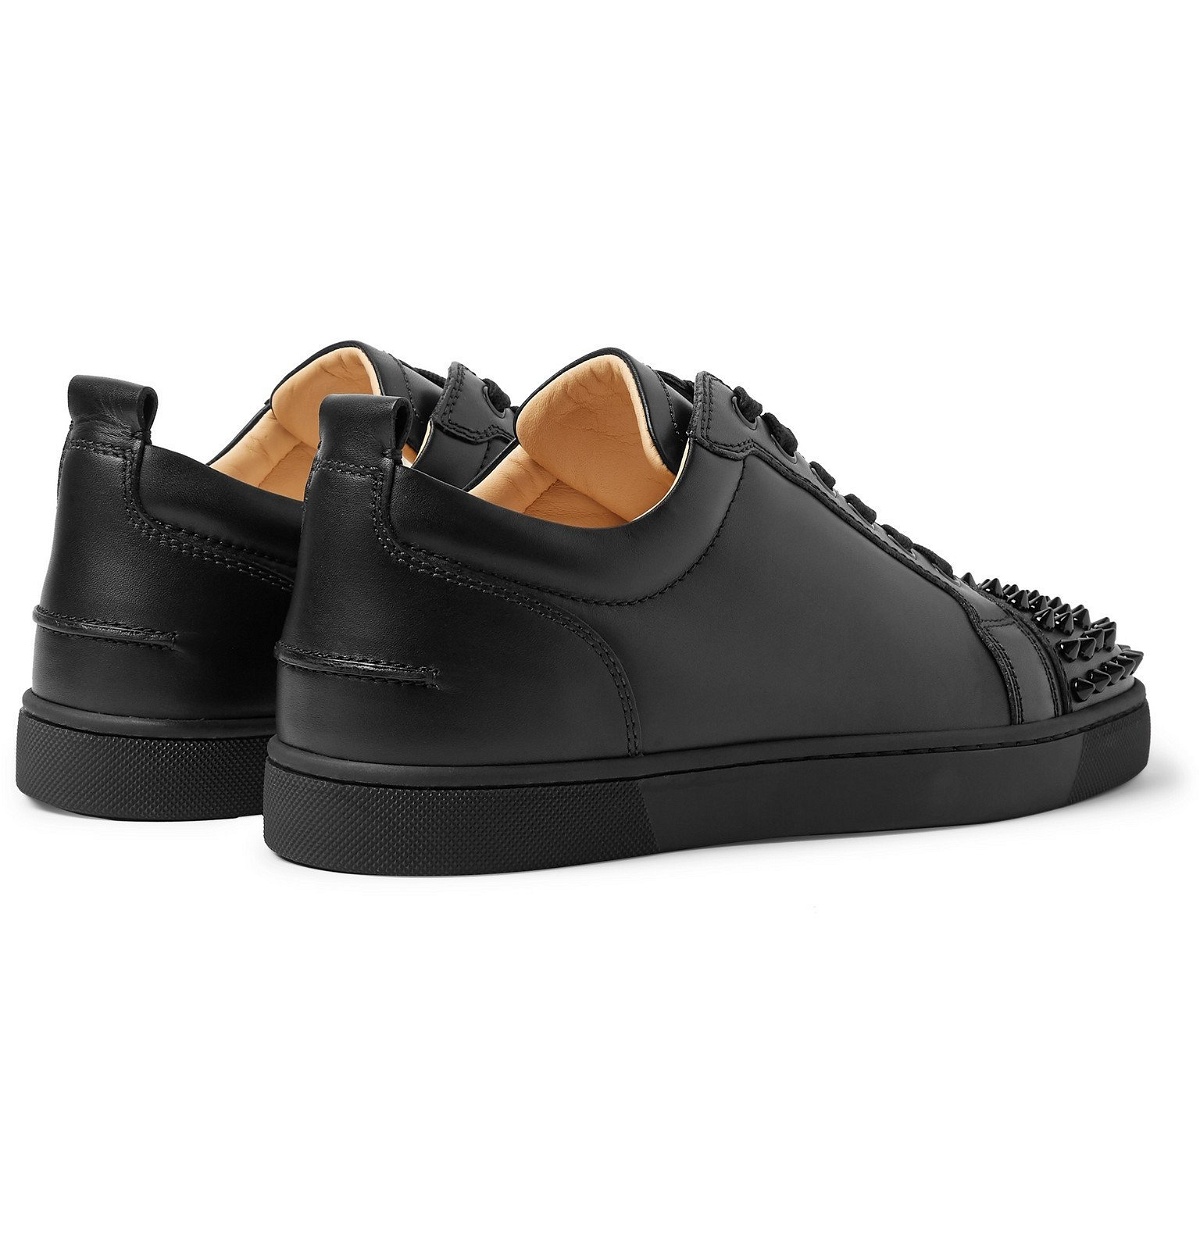 Louis Junior Spikes Cap-Toe Leather Sneakers